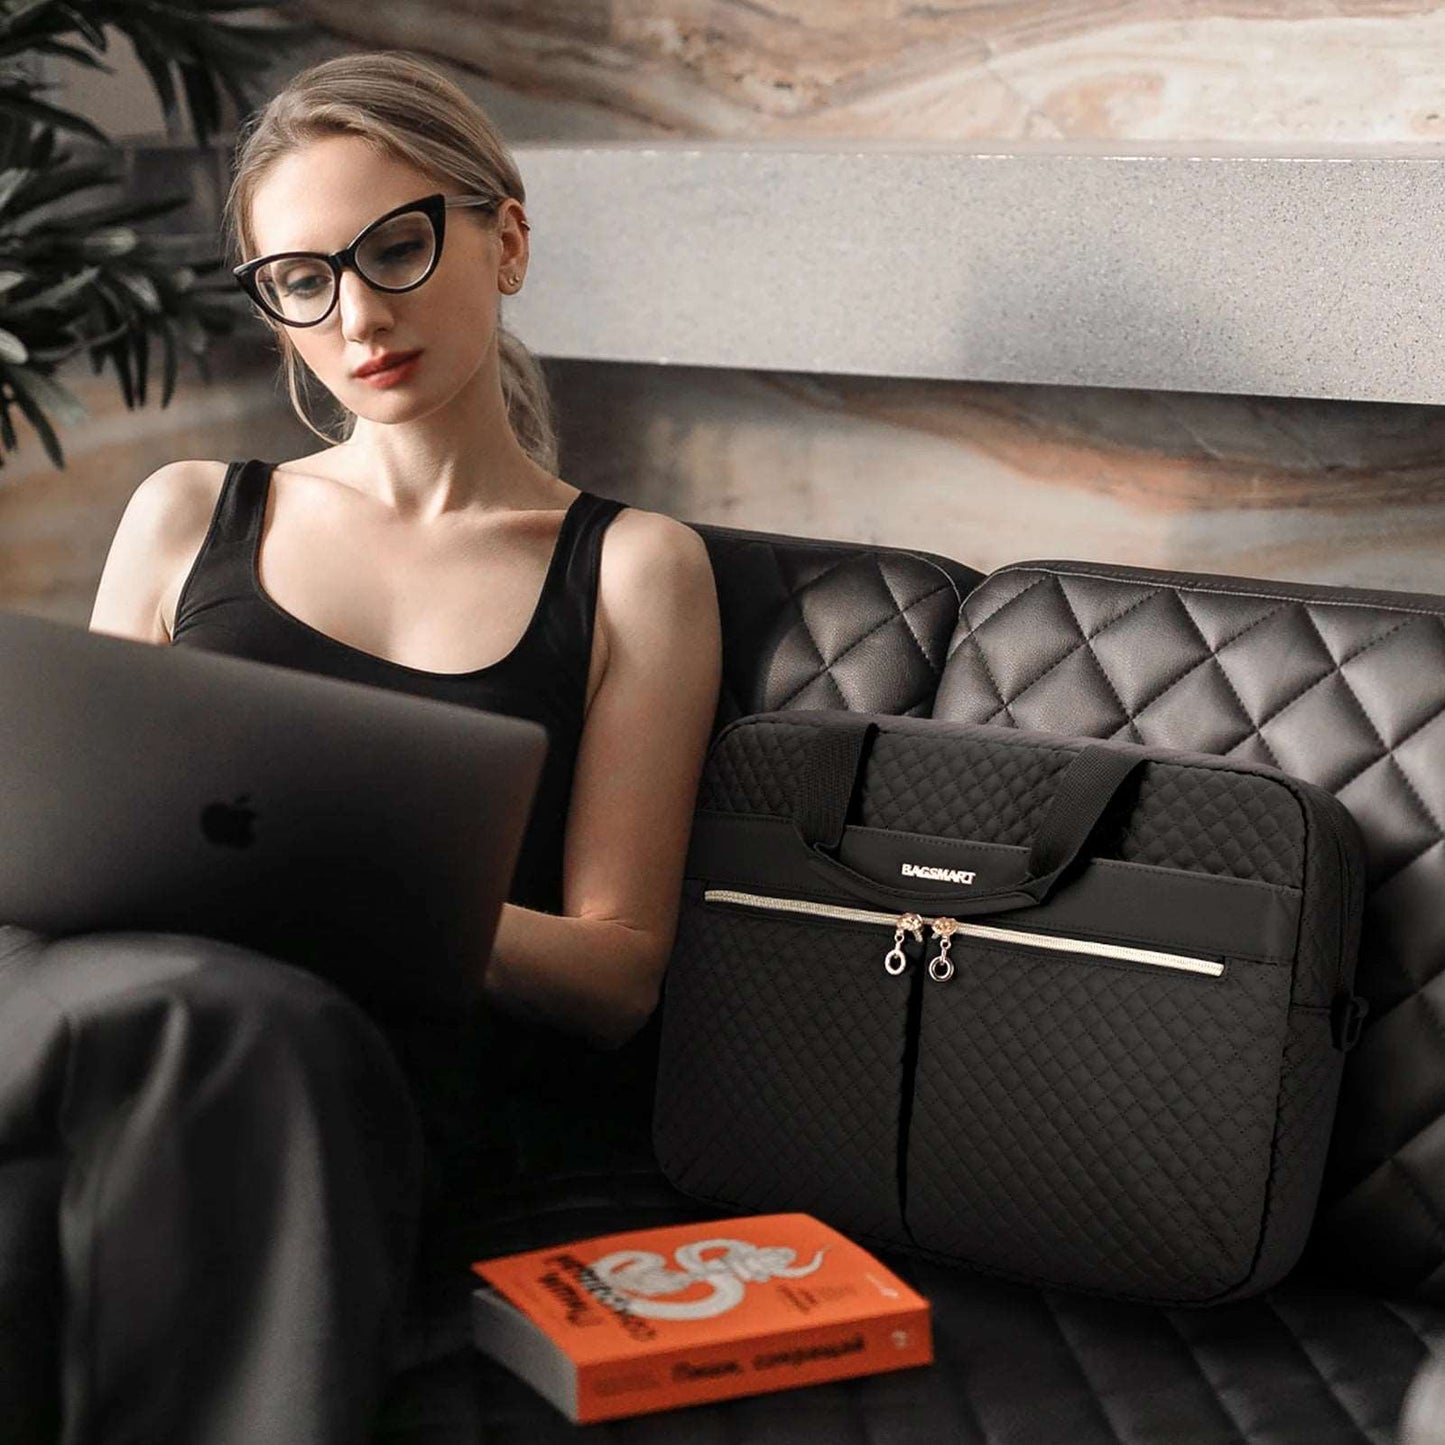 BAGSMART Laptop Bags for Women 15.6 17.3 inch Notebook / Macbook Air Pro 13 15 Bag